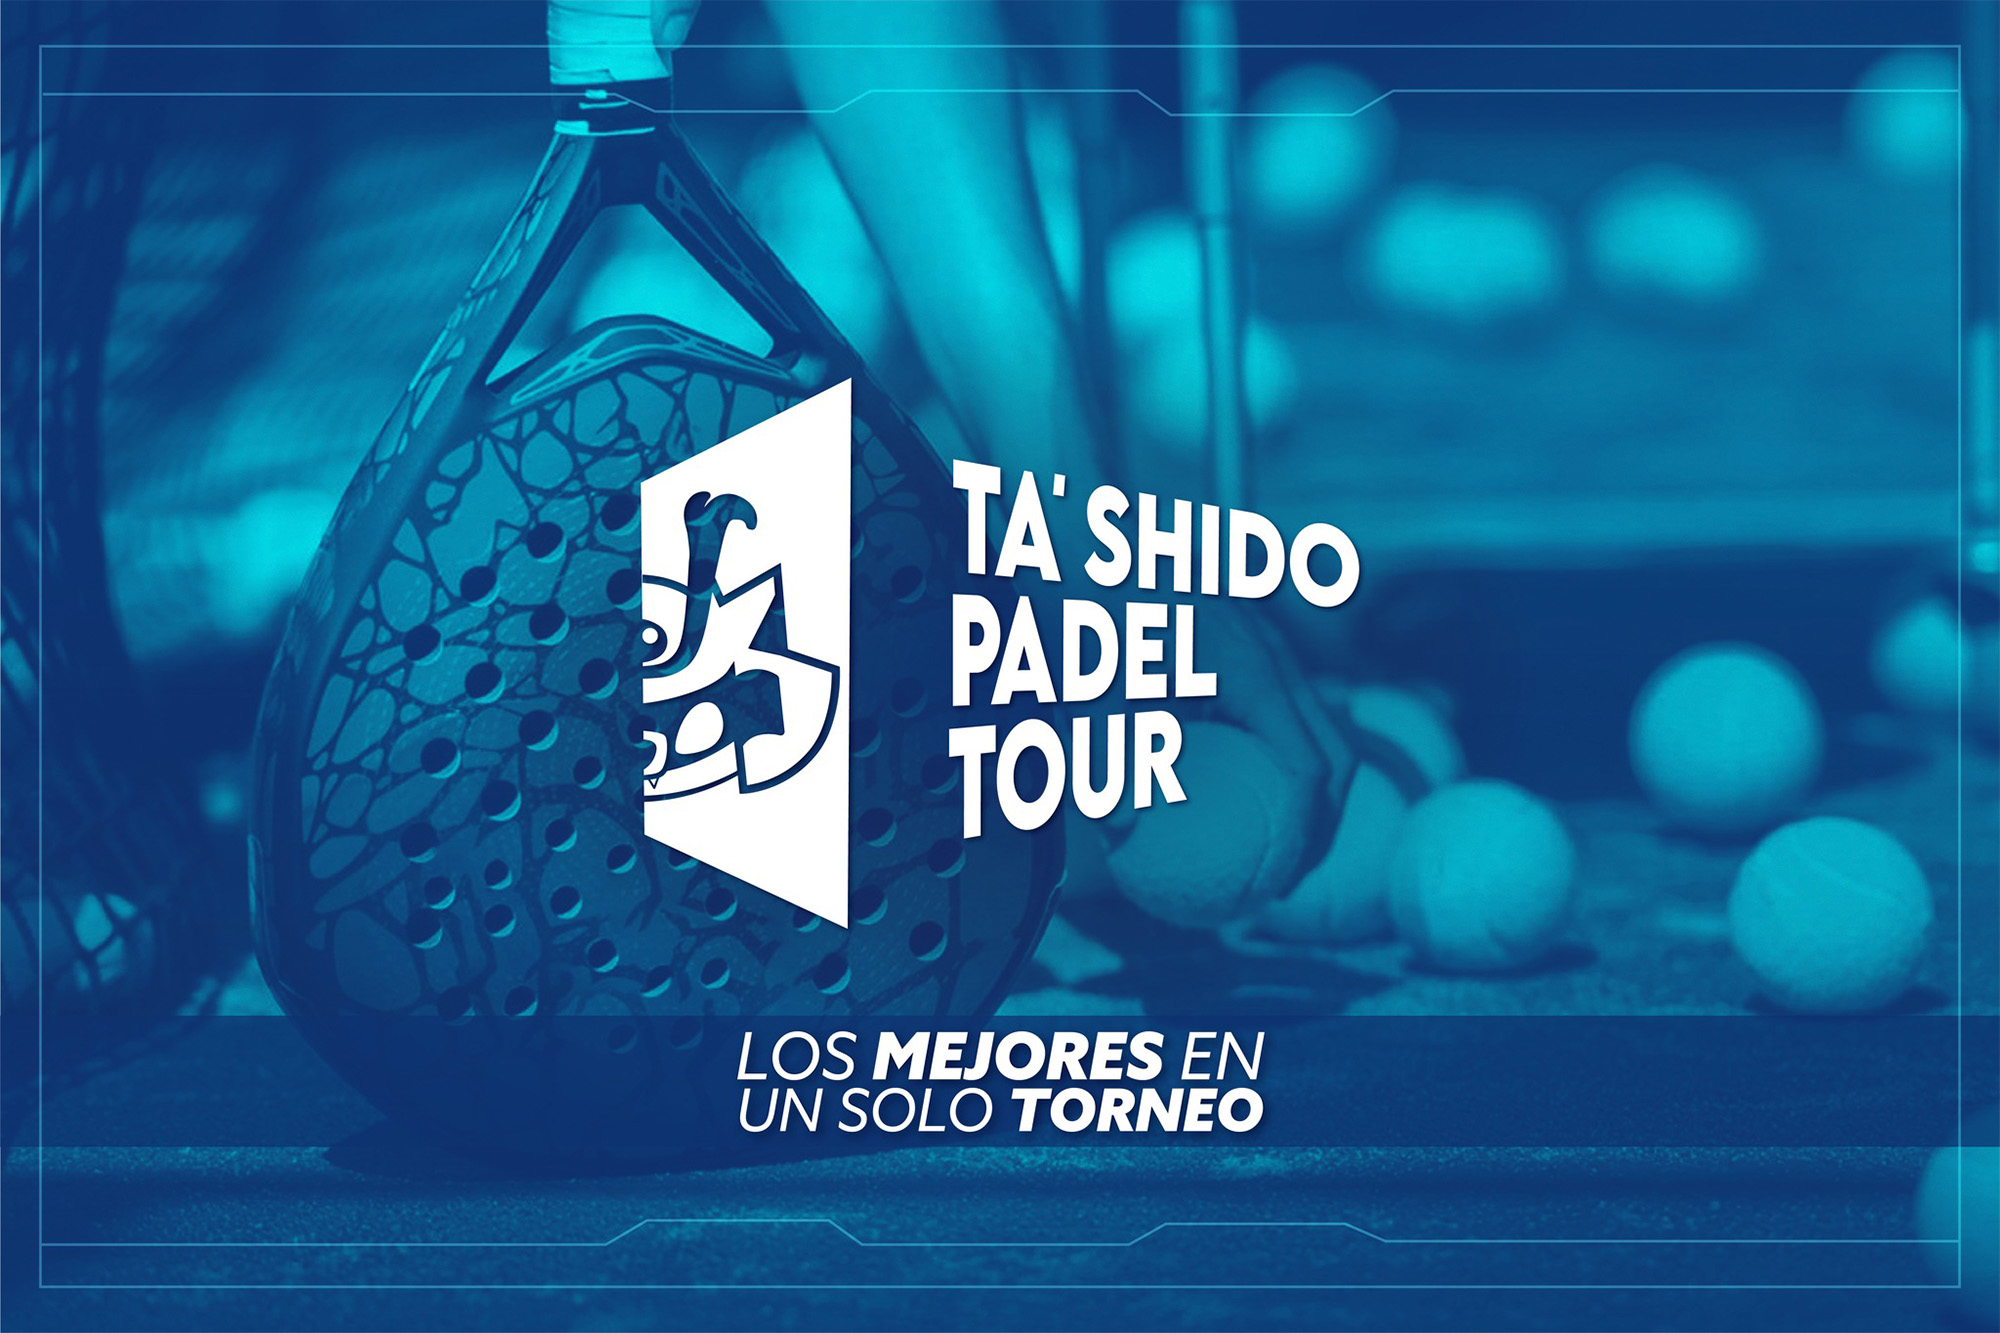 Tashido Pádel Tour